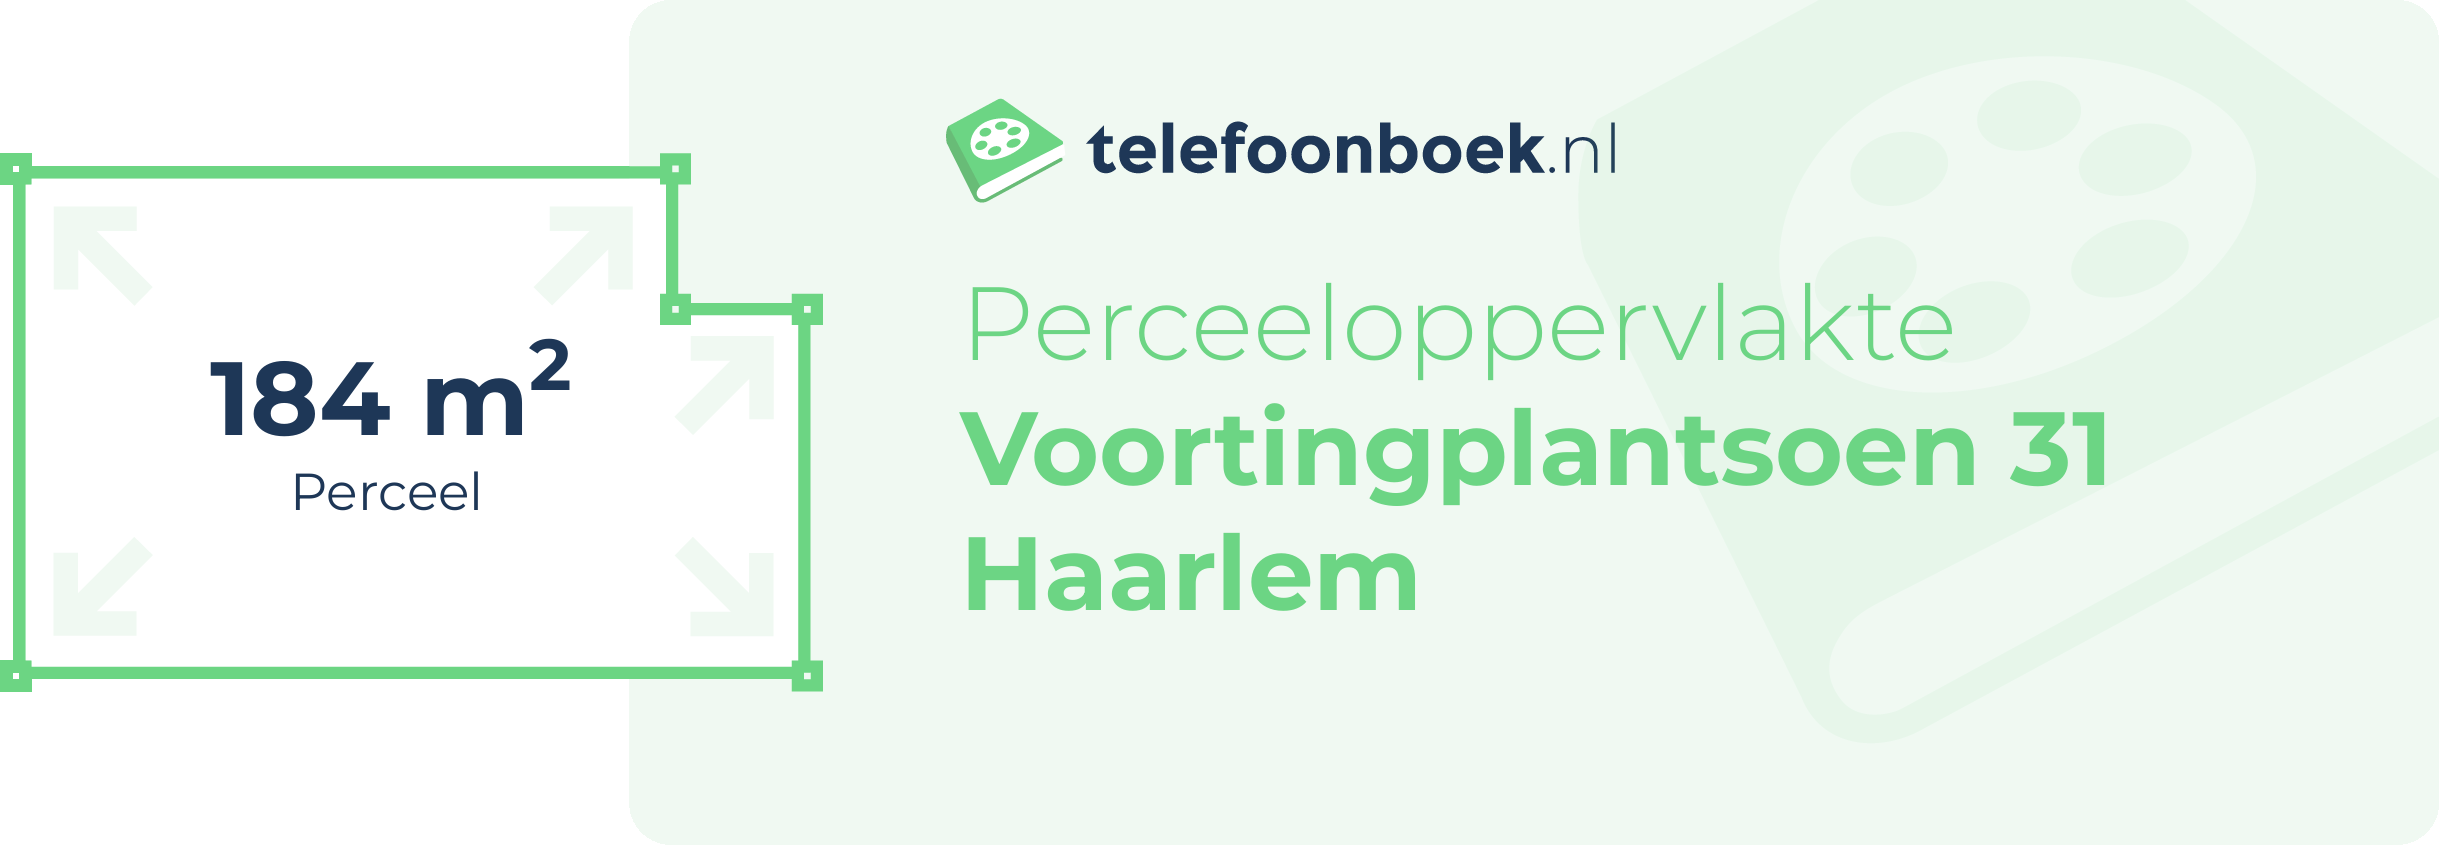 Perceeloppervlakte Voortingplantsoen 31 Haarlem